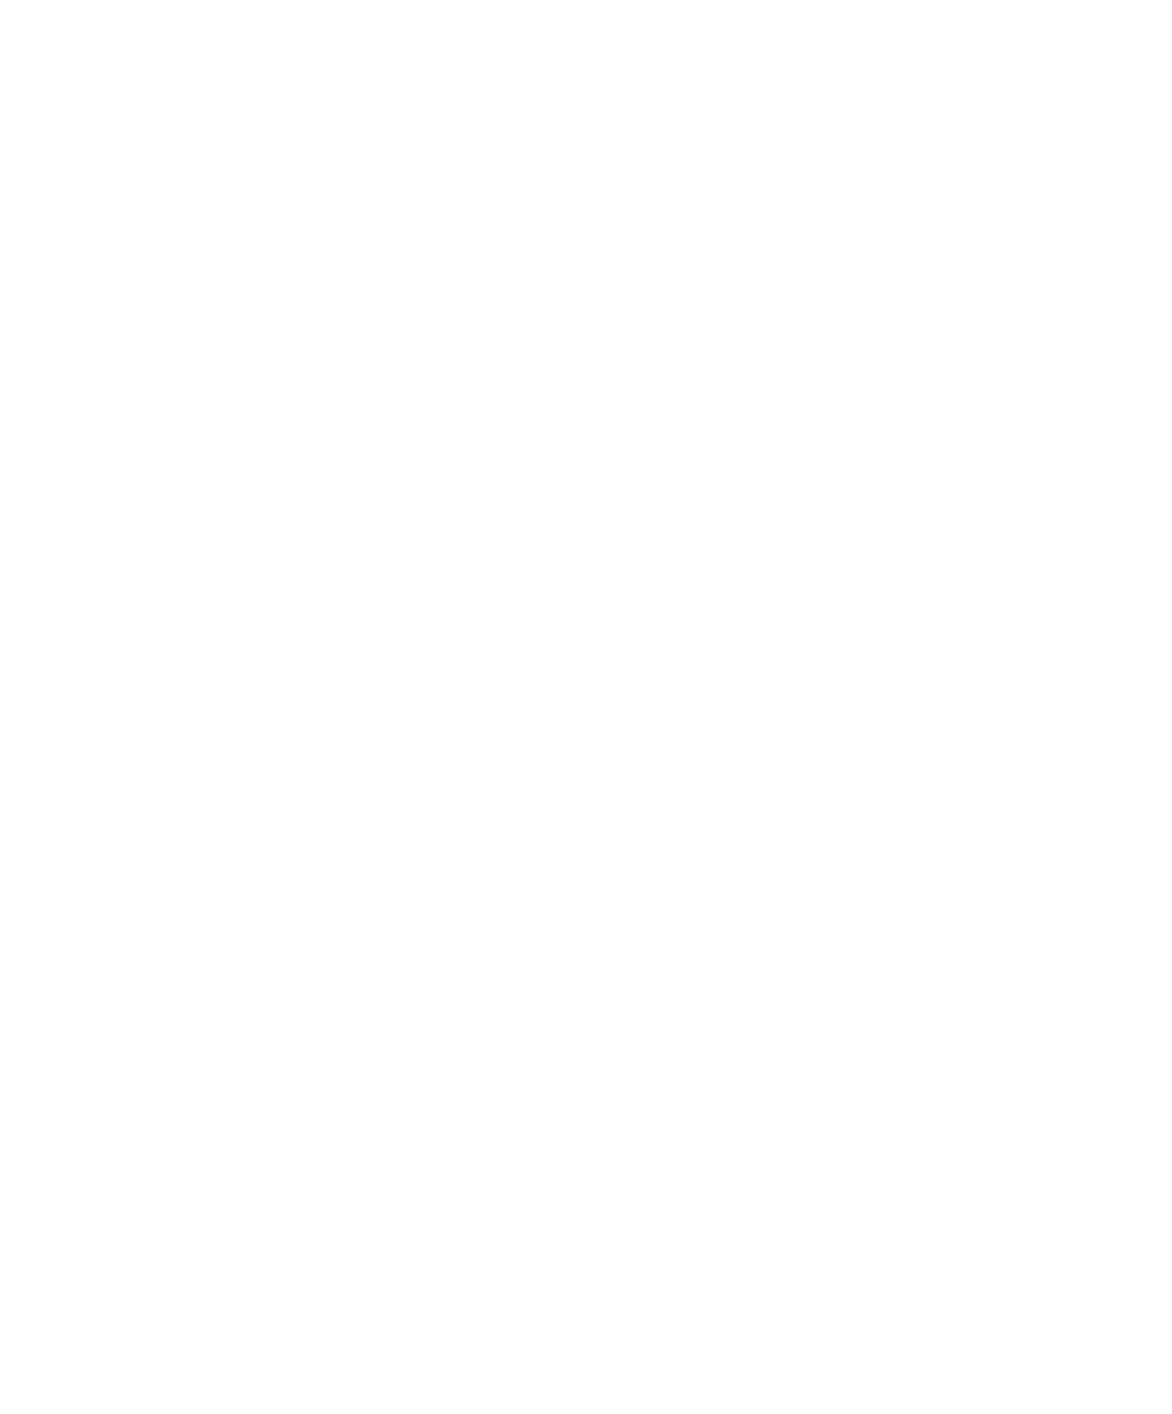 U92 The moose logo